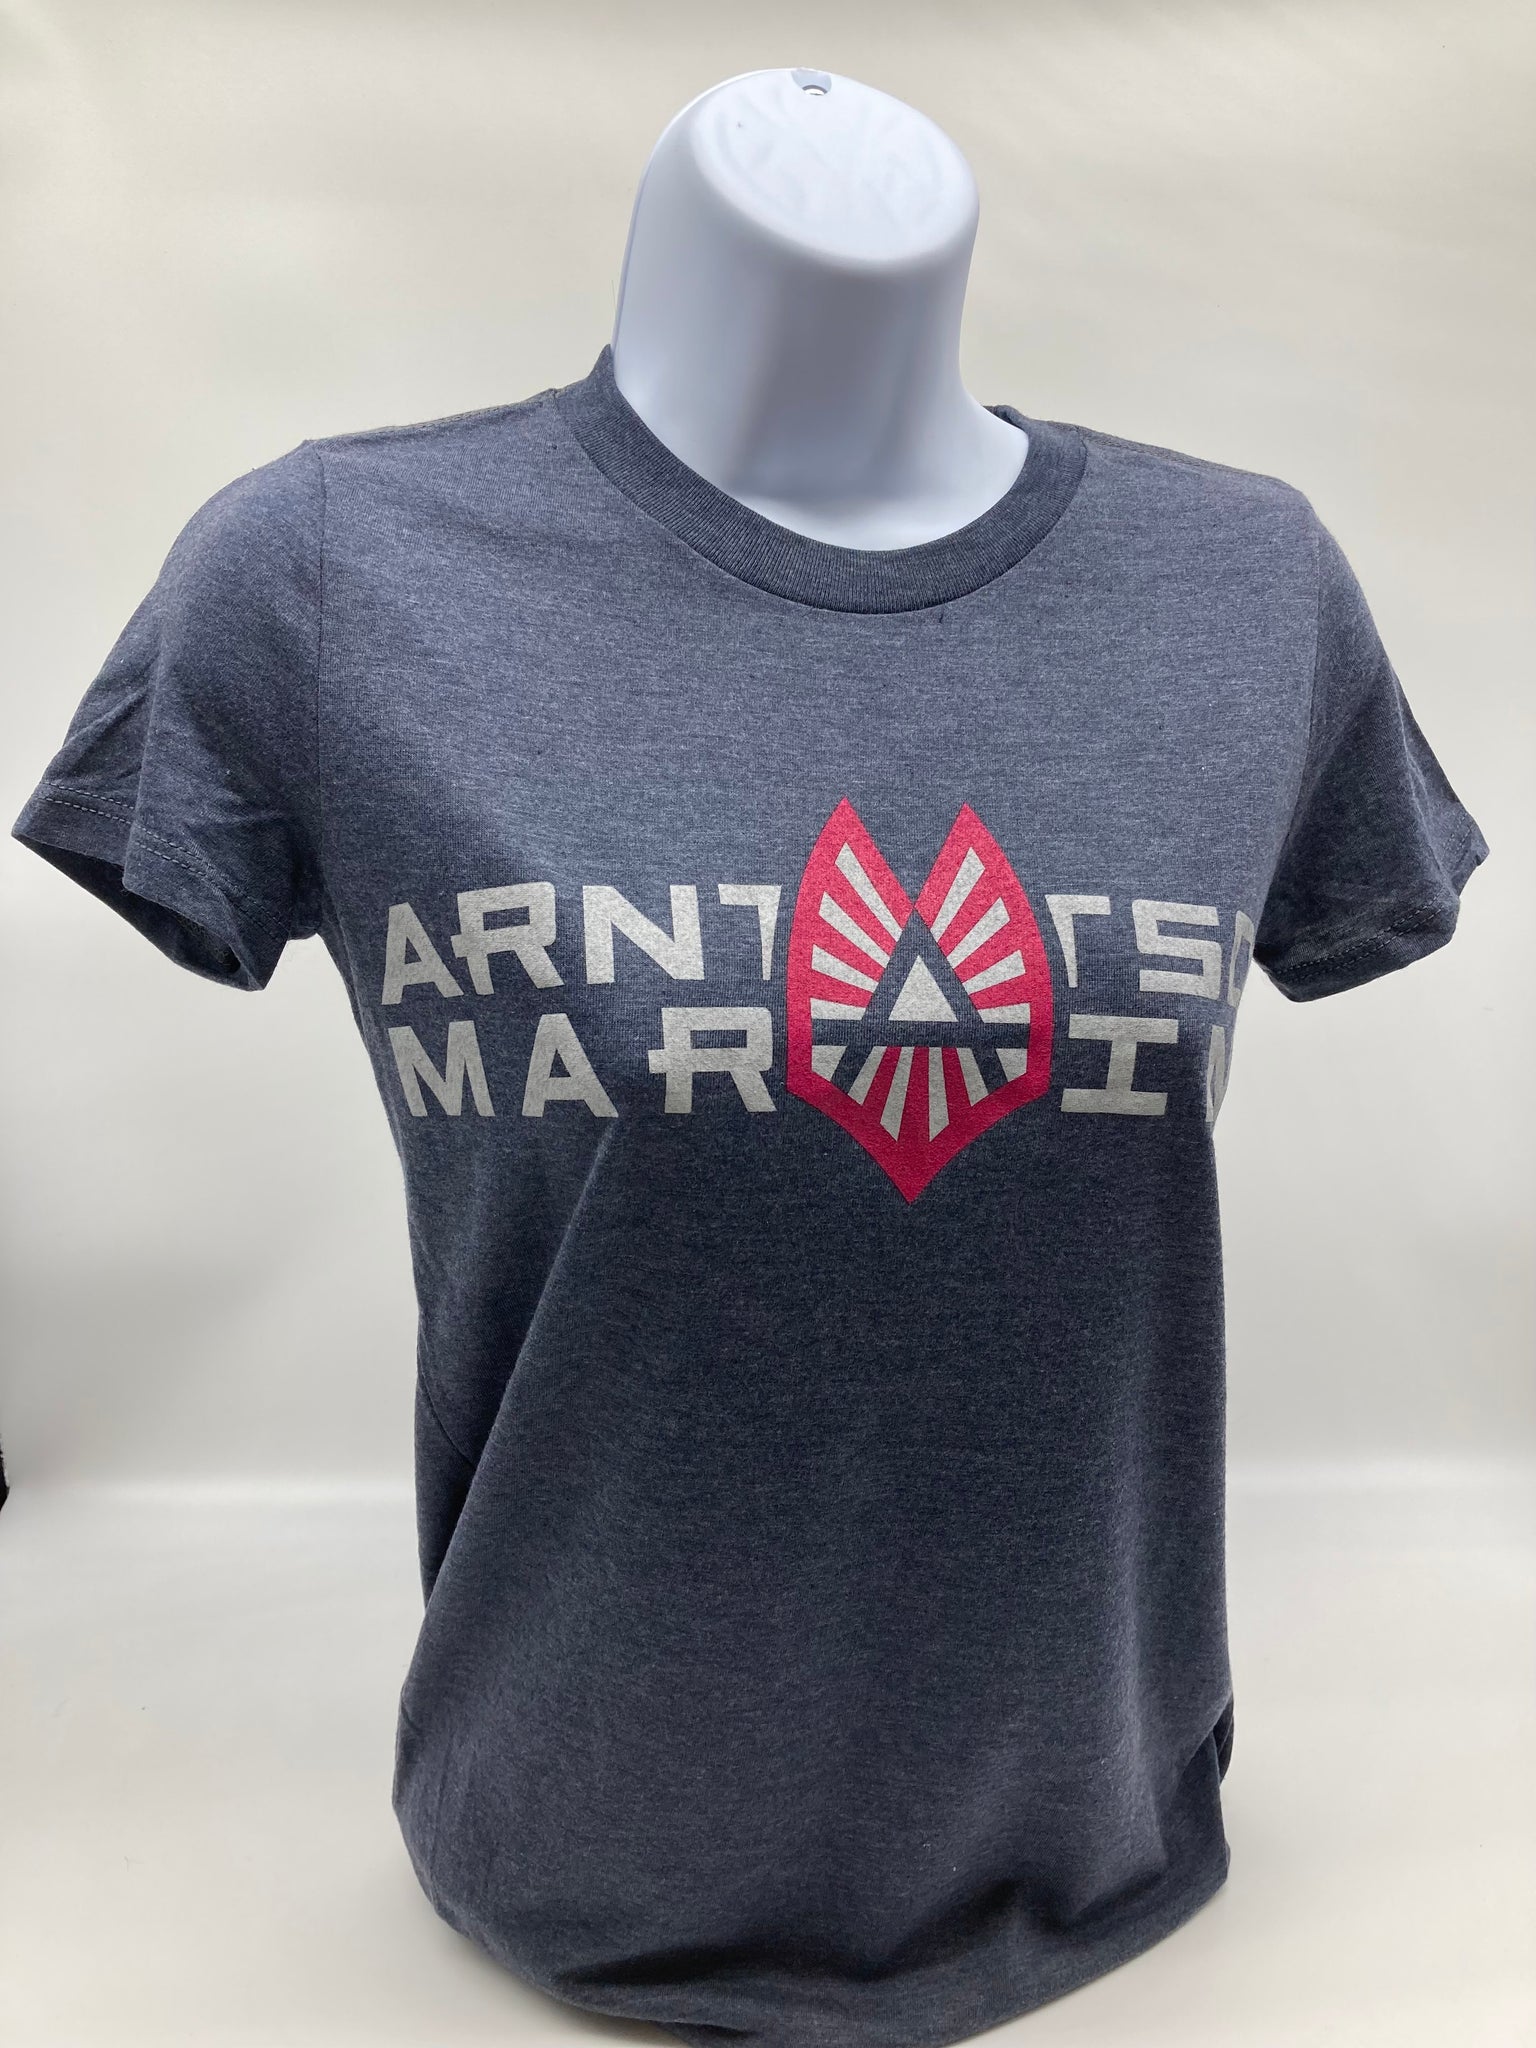 Arntson Marine Women's T-Shirt